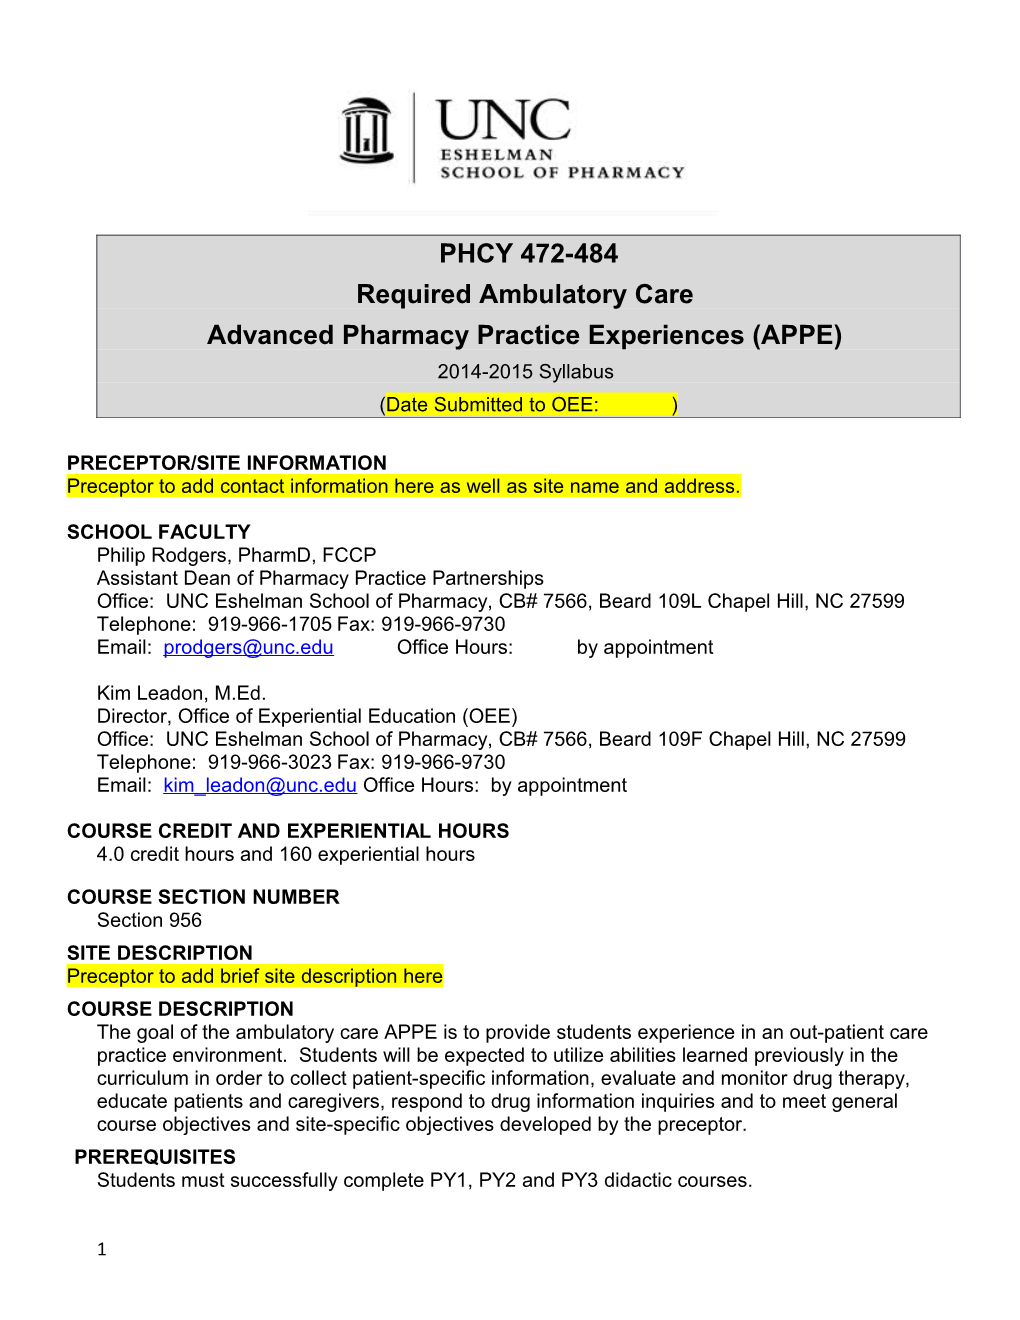 Advanced Pharmacy Practice Experiences (APPE)